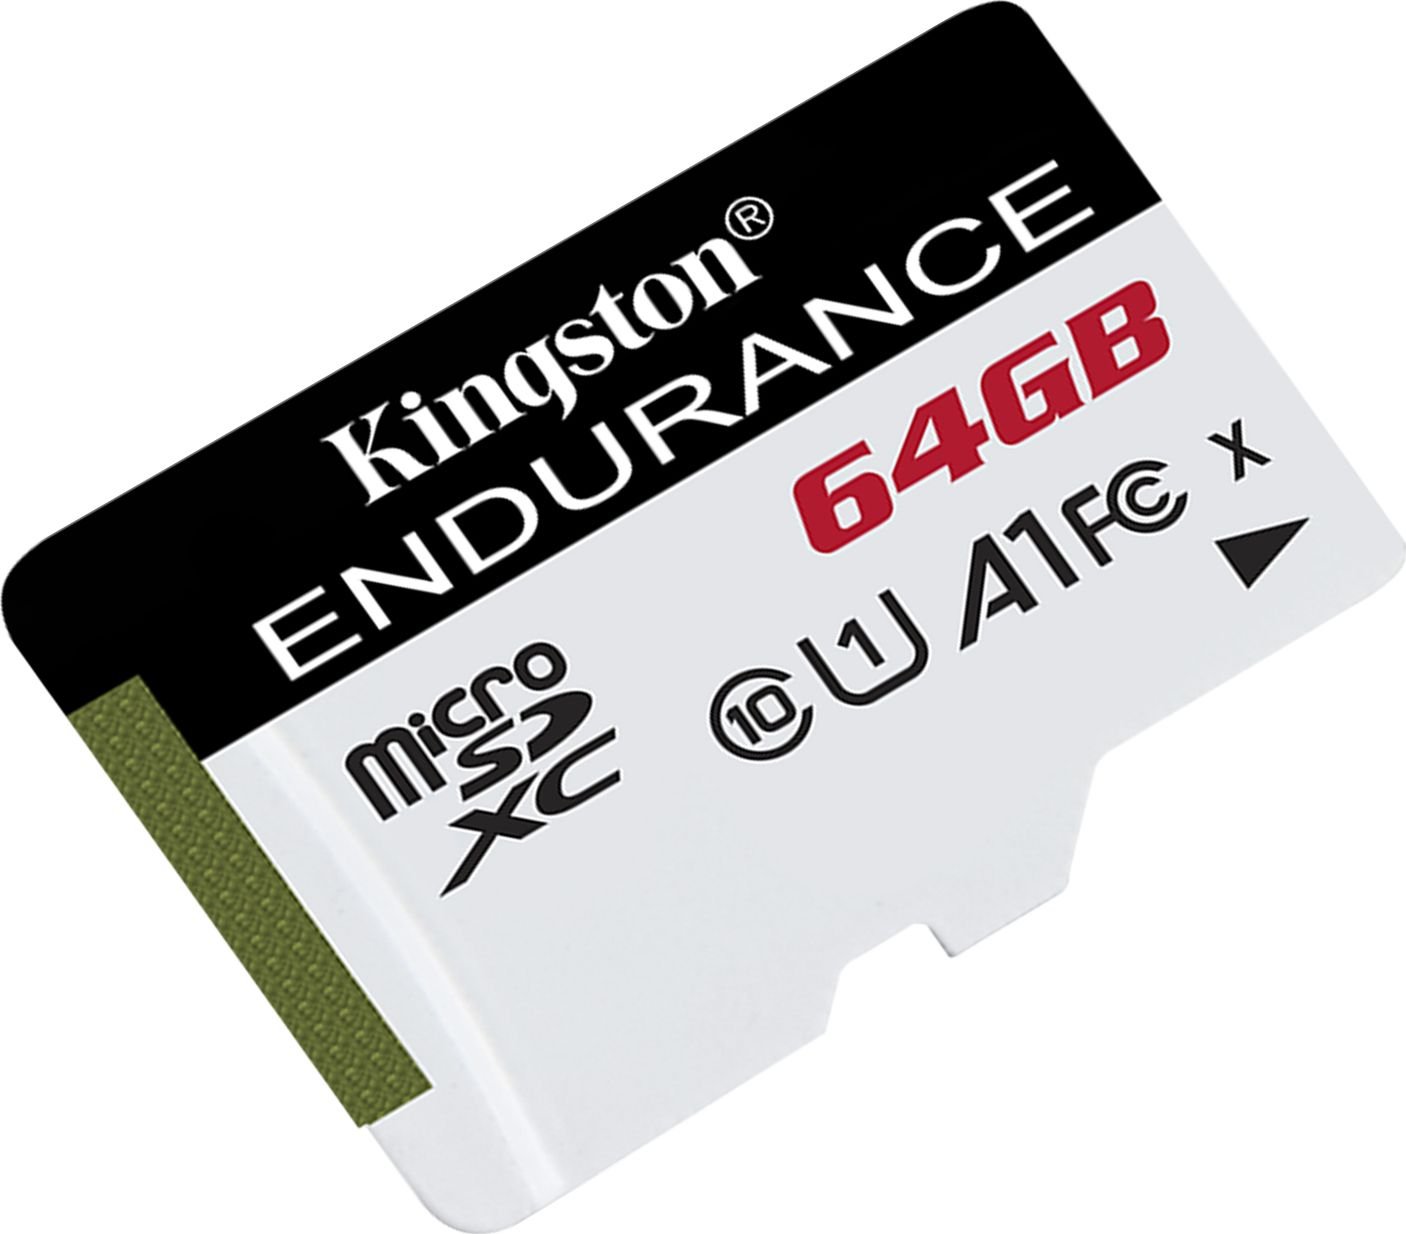 Card de memorie Kingston MicroSDXC Endurance, 64GB, 95R/30W, Clasa 10, UHS-I